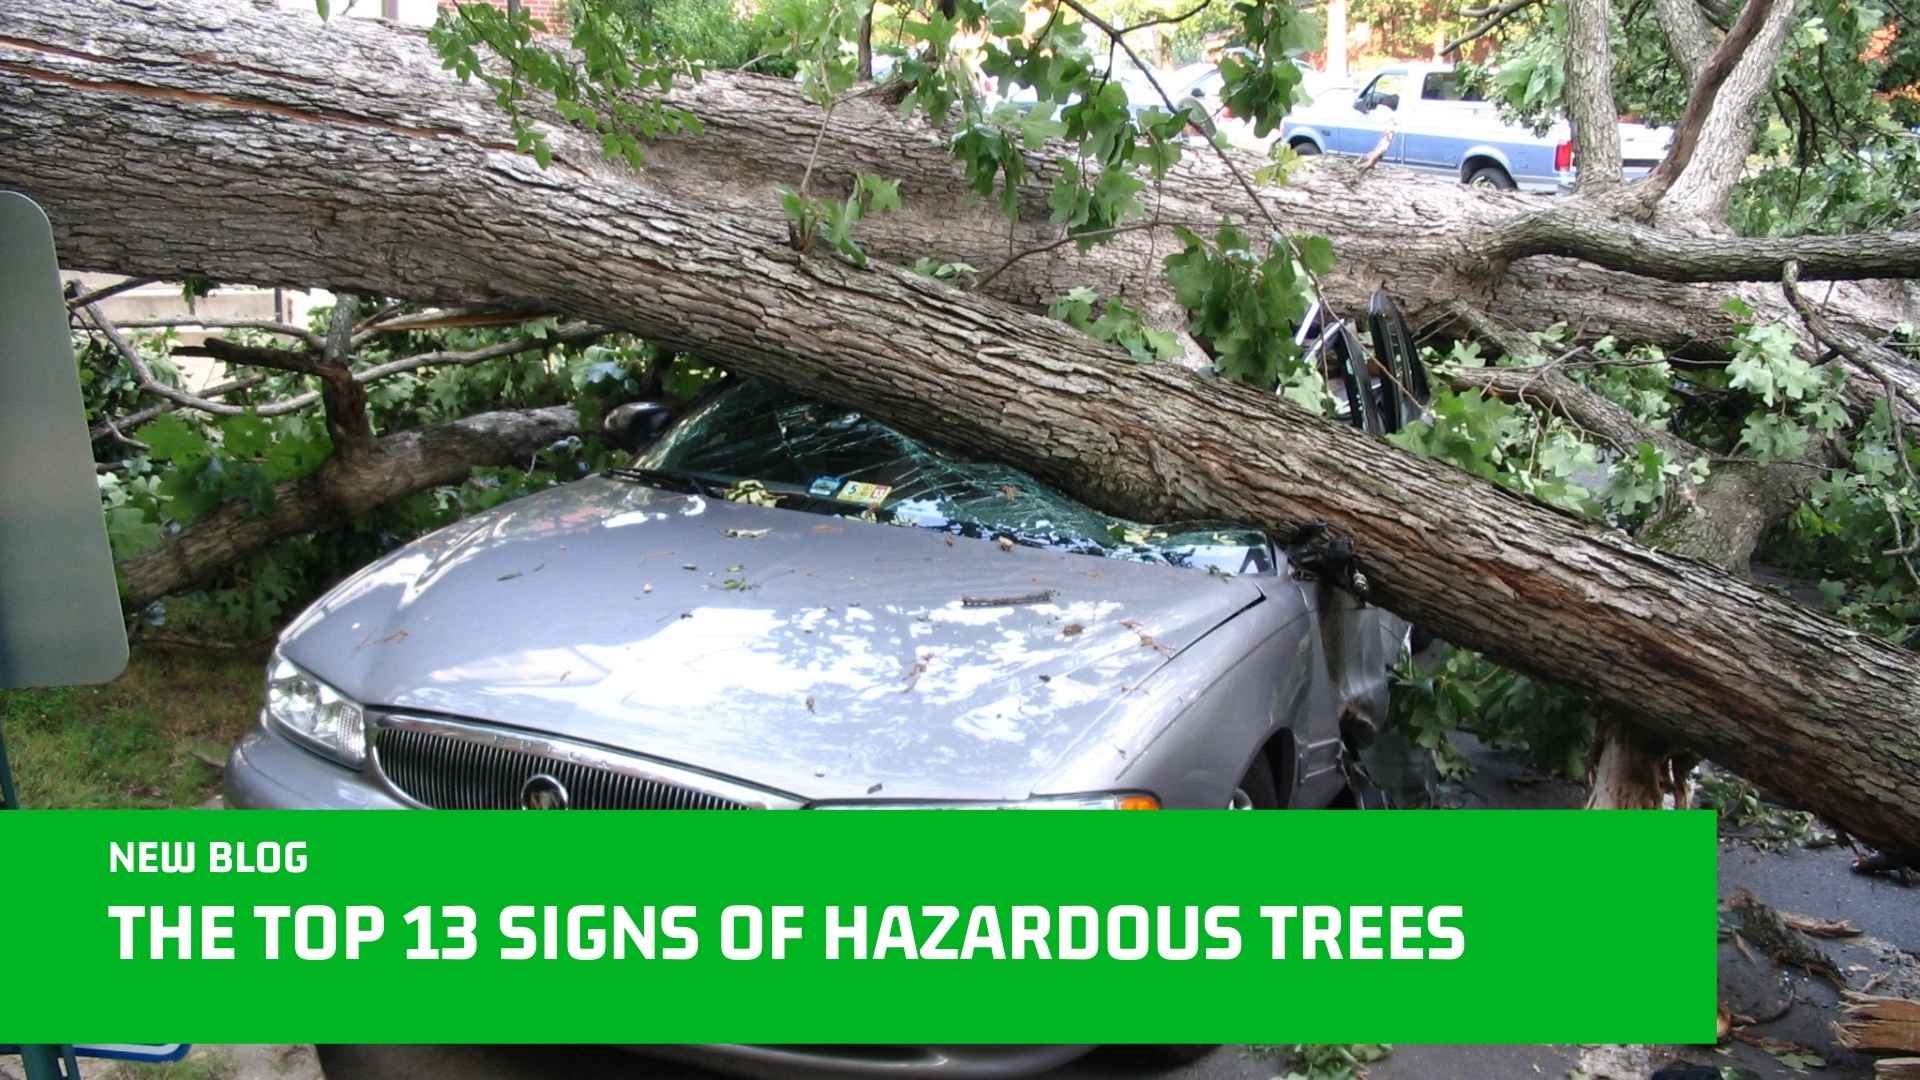 The Top 13 Signs of Hazardous Trees